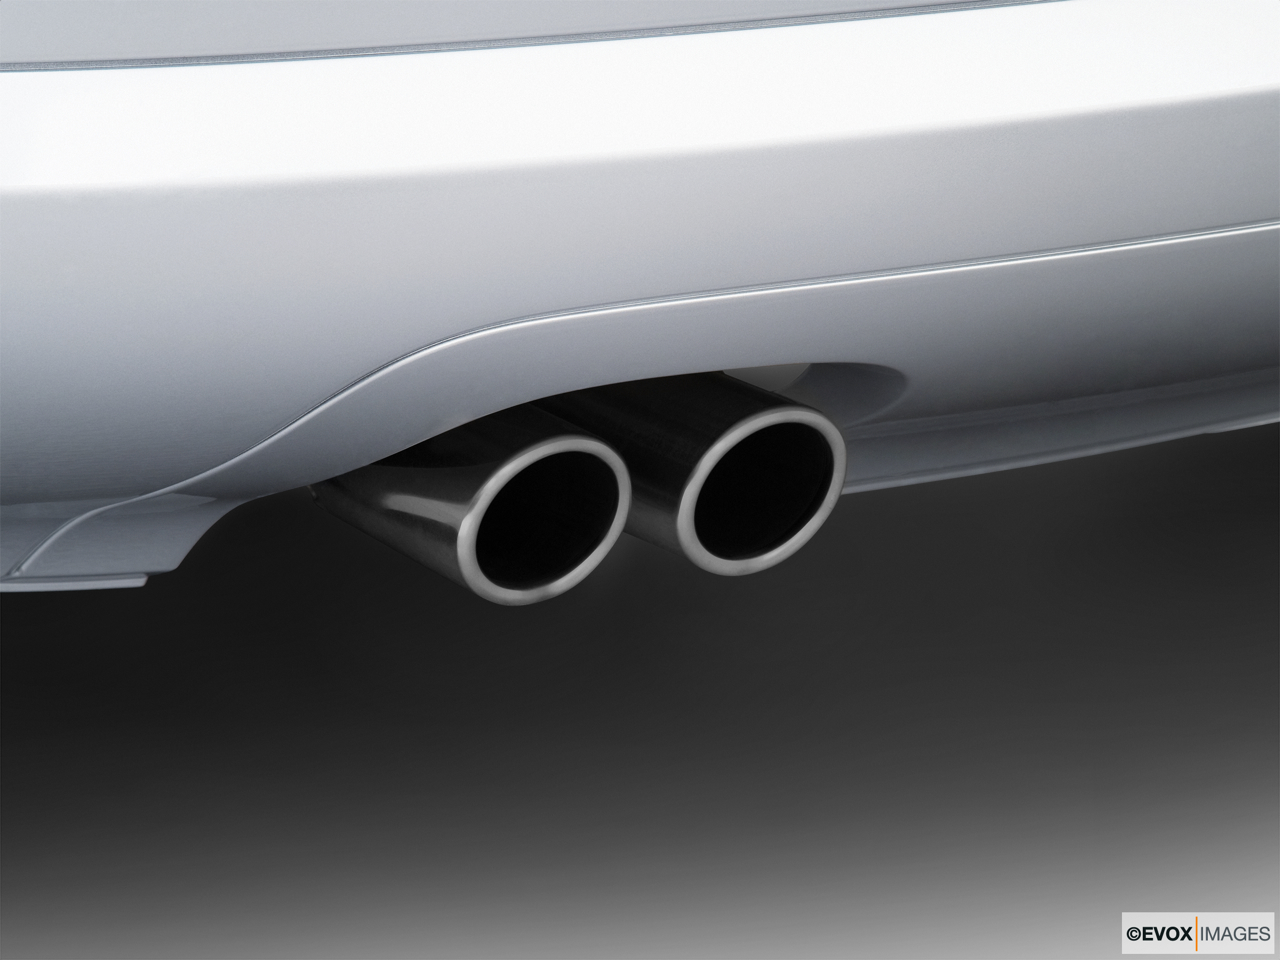 2010 Volkswagen Eos Lux Chrome tip exhaust pipe. 